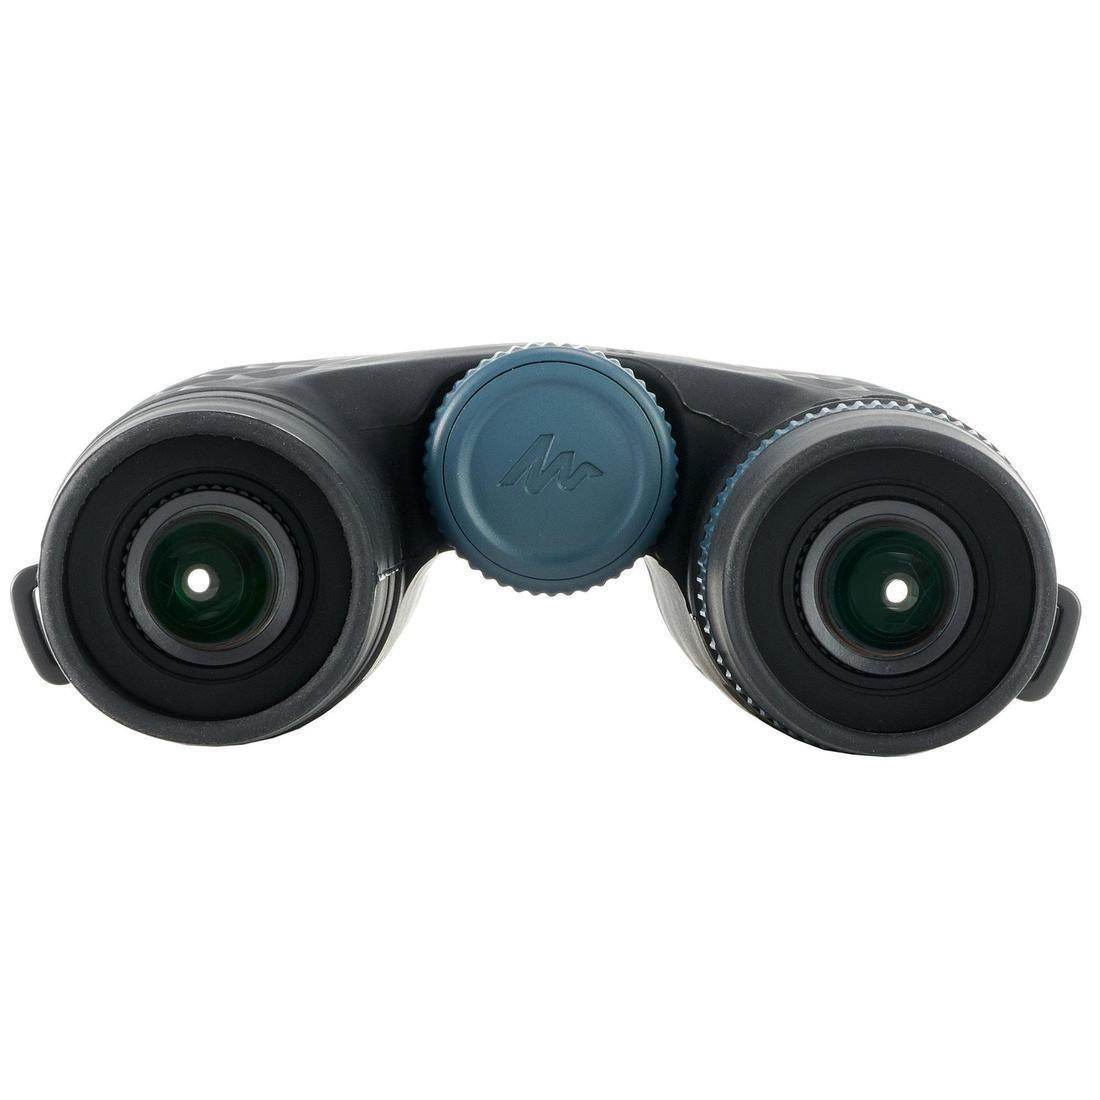 QUECHUA - Mh B 560 Adjustable Adult Hiking X12 Magnification Binoculars